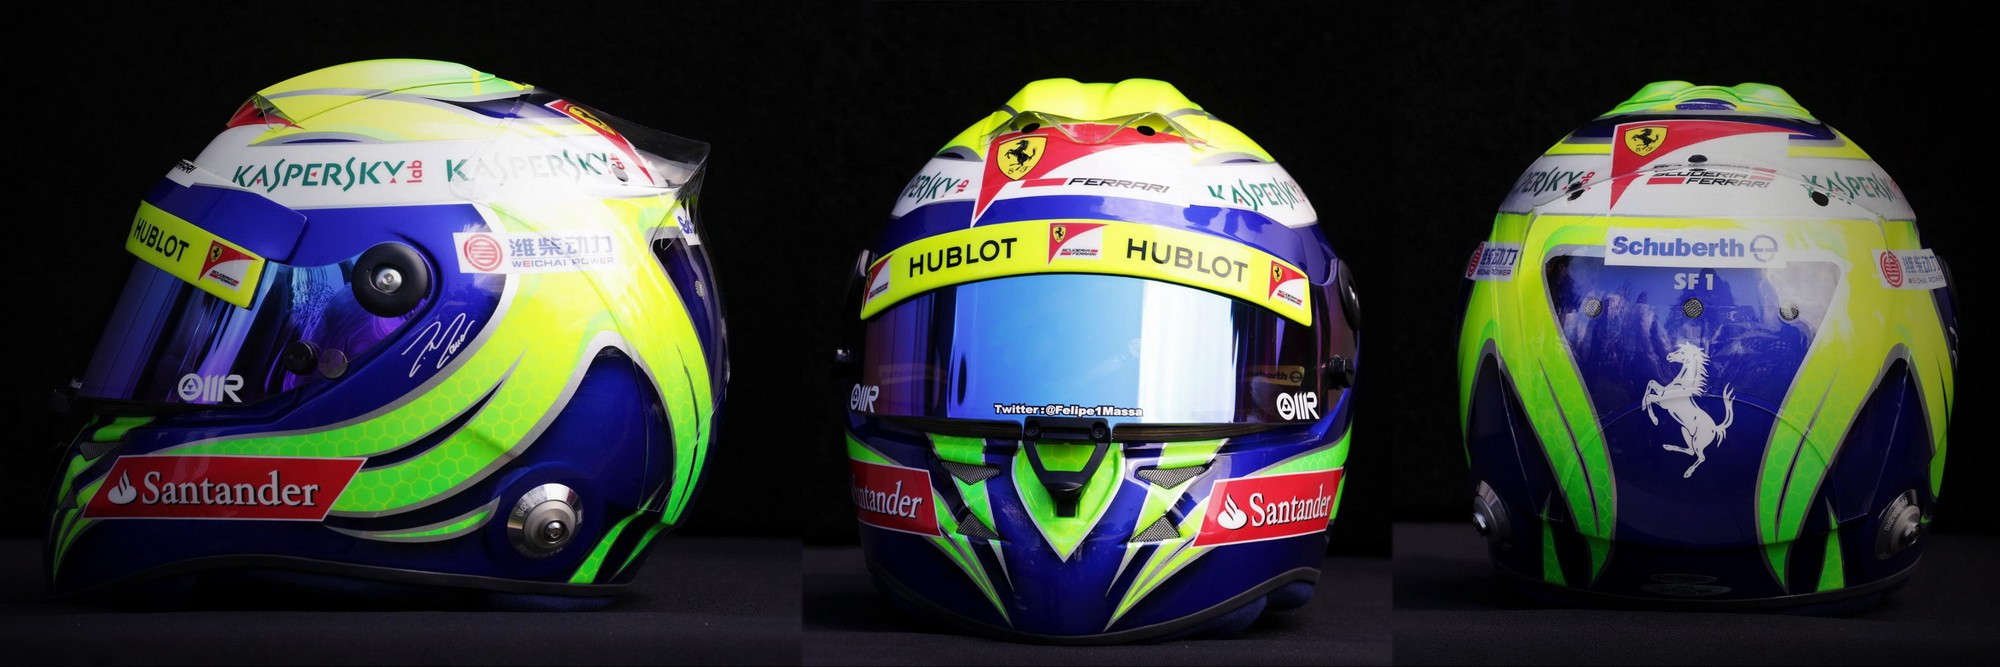 Шлем Фелипе Массы на сезон 2013 года | 2013 helmet of Felipe Massa